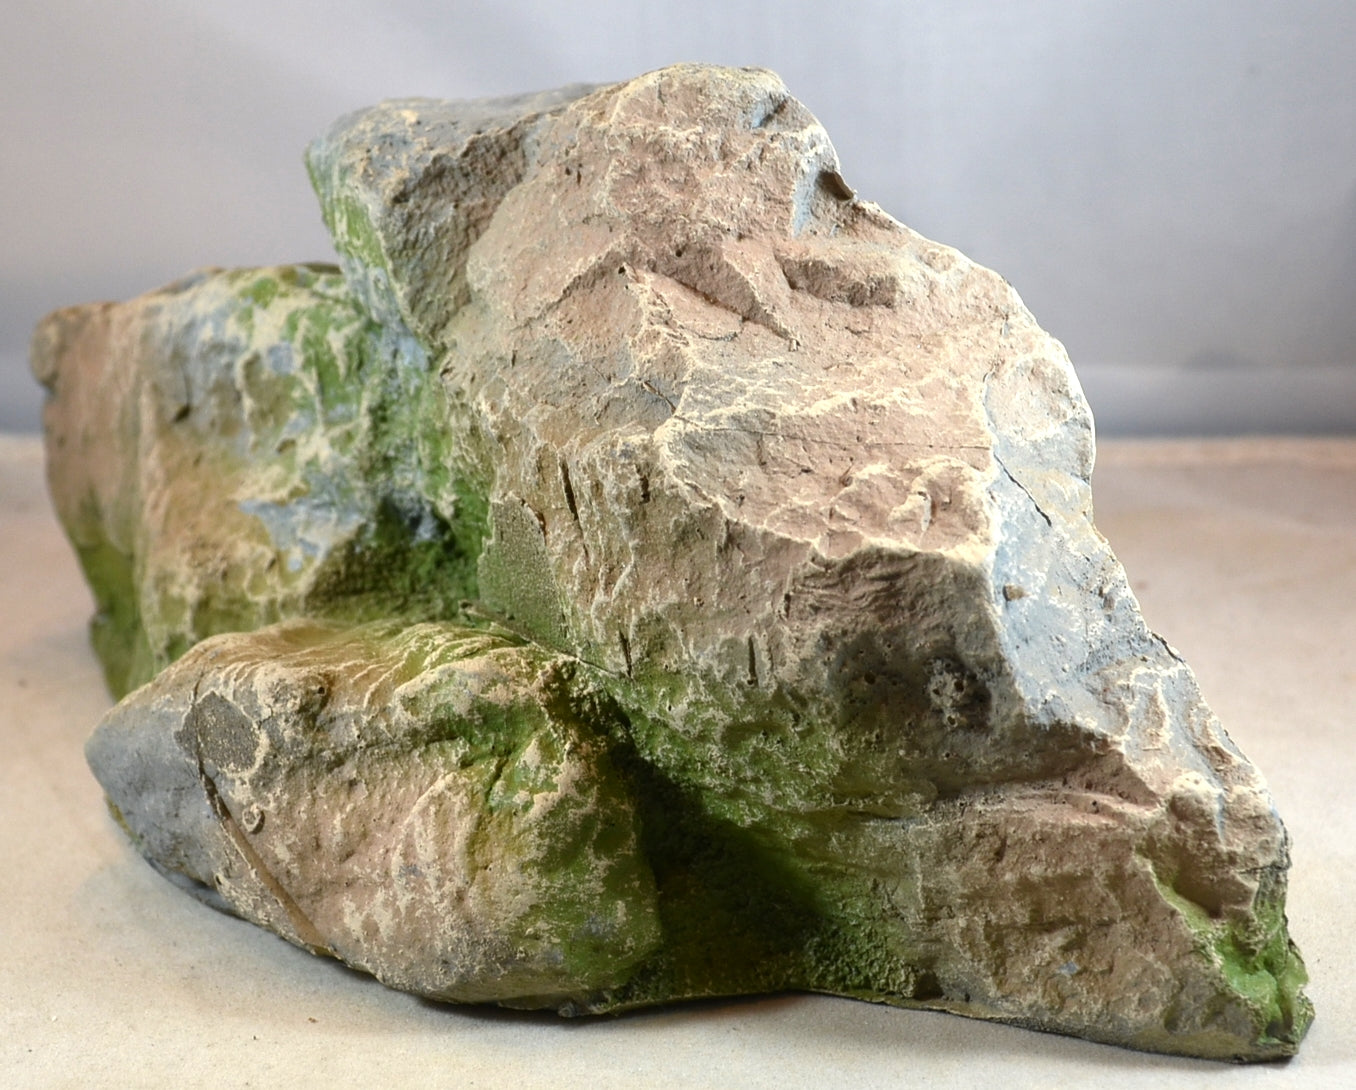 Atherton Scenics 9928 - Small Rock Formation